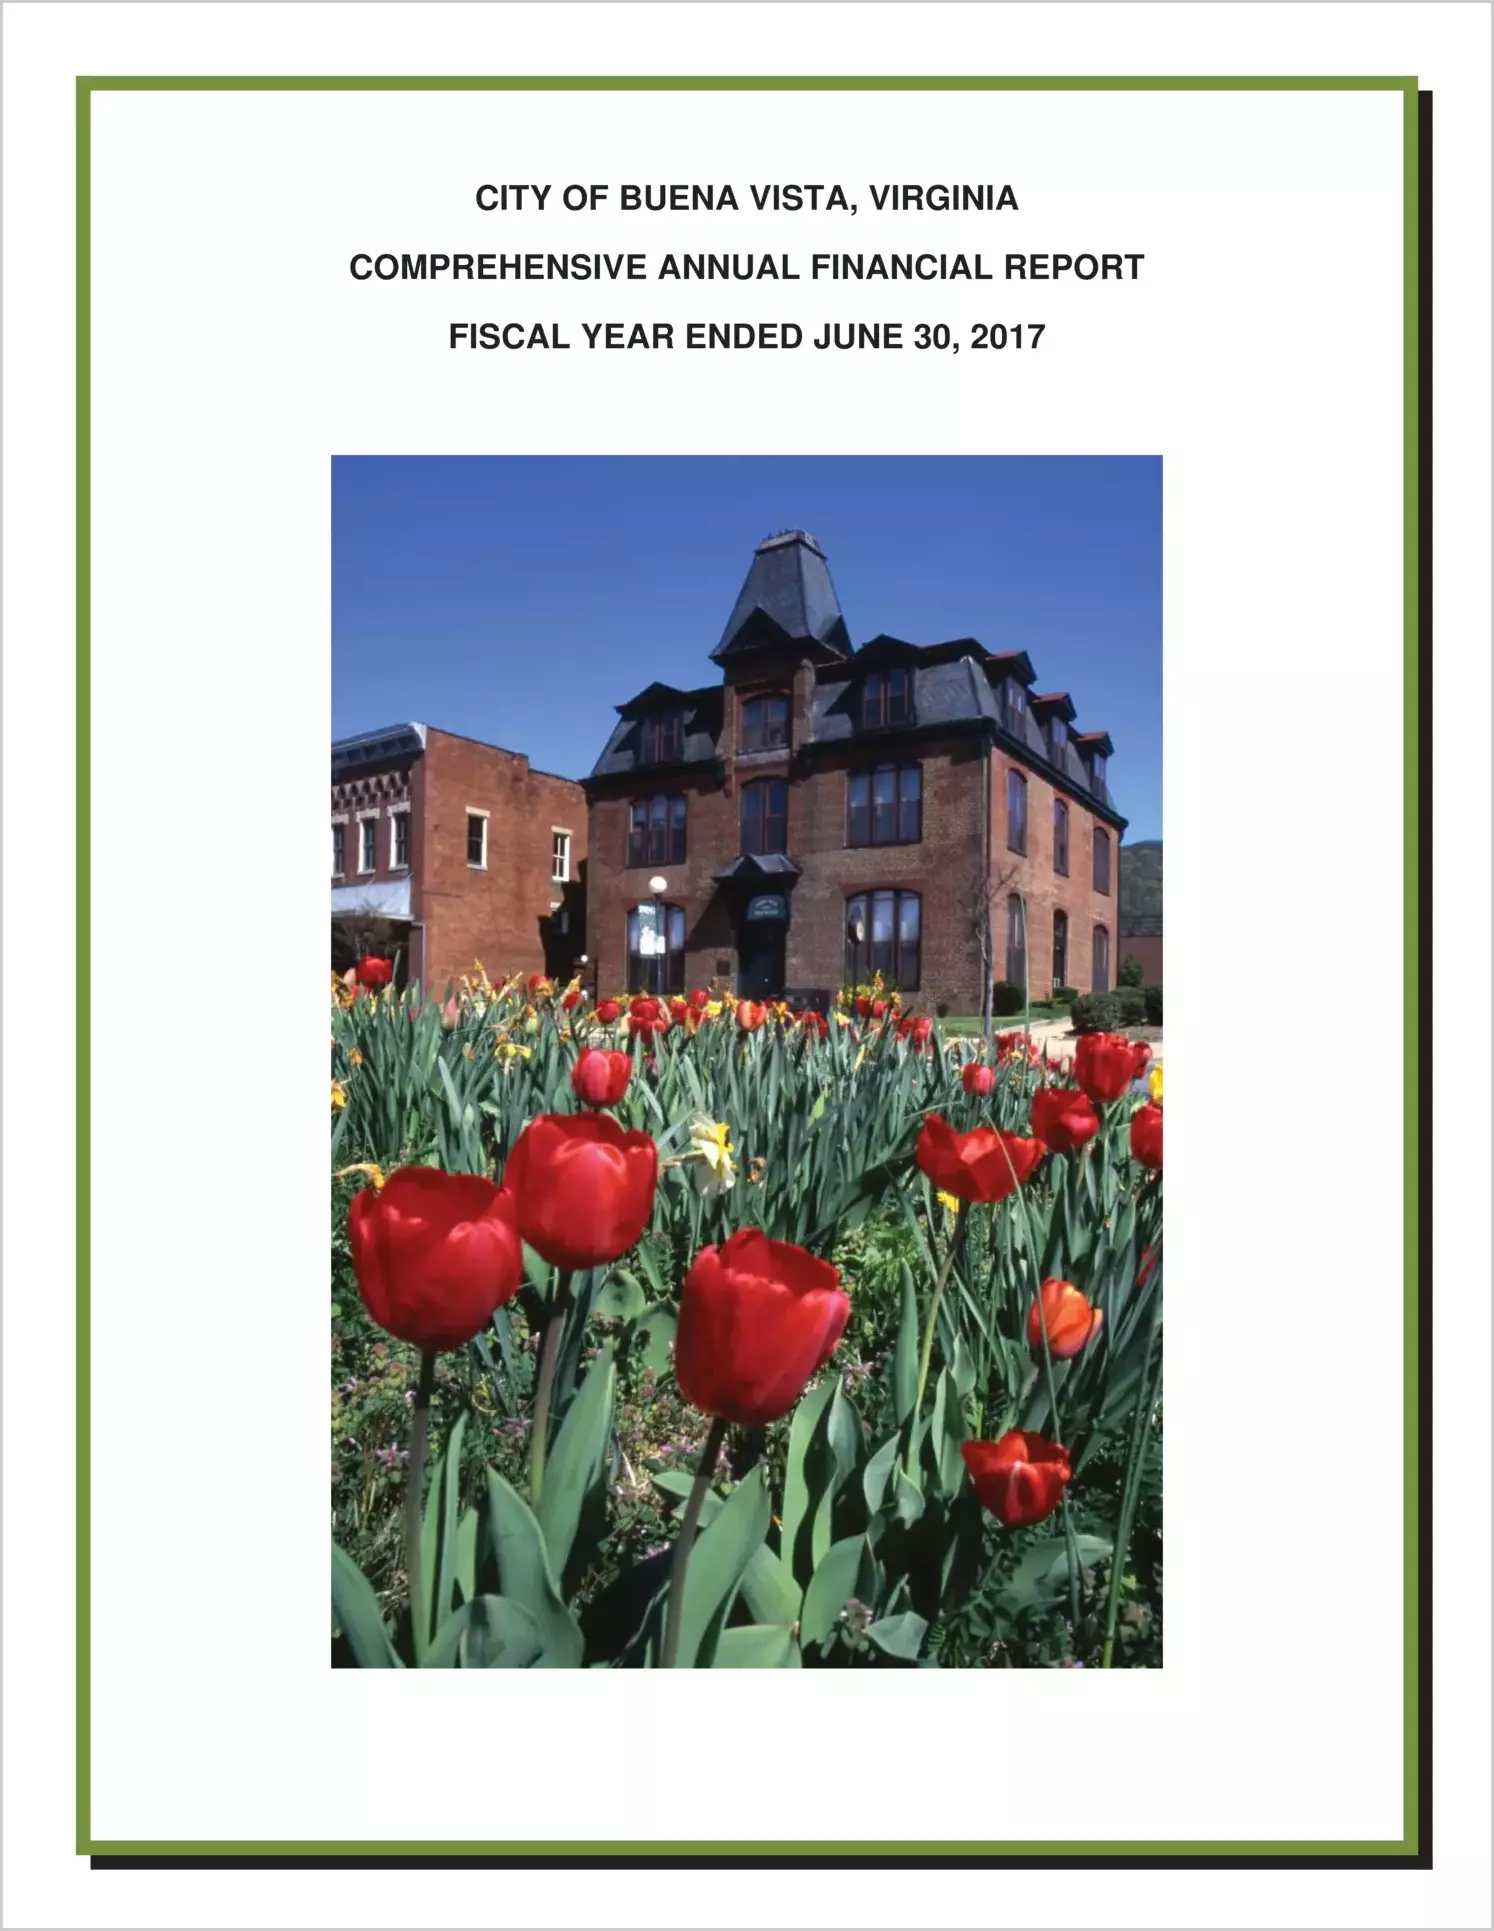 2017 Annual Financial Report for City of Buena Vista